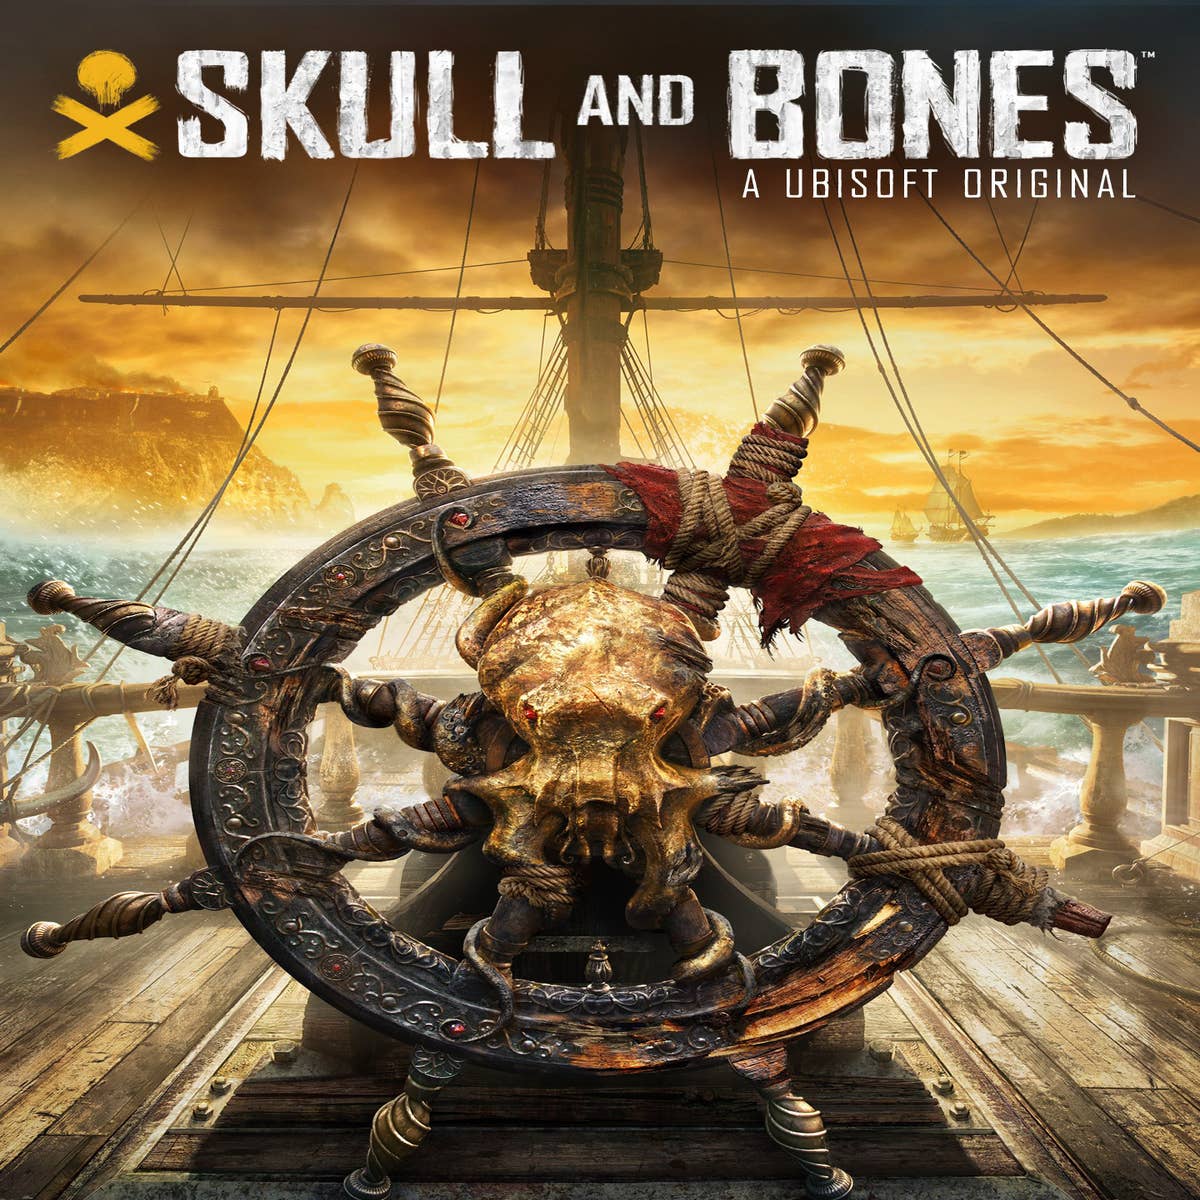 Skull and Bones: E3 2017 Cinematic Announcement Trailer